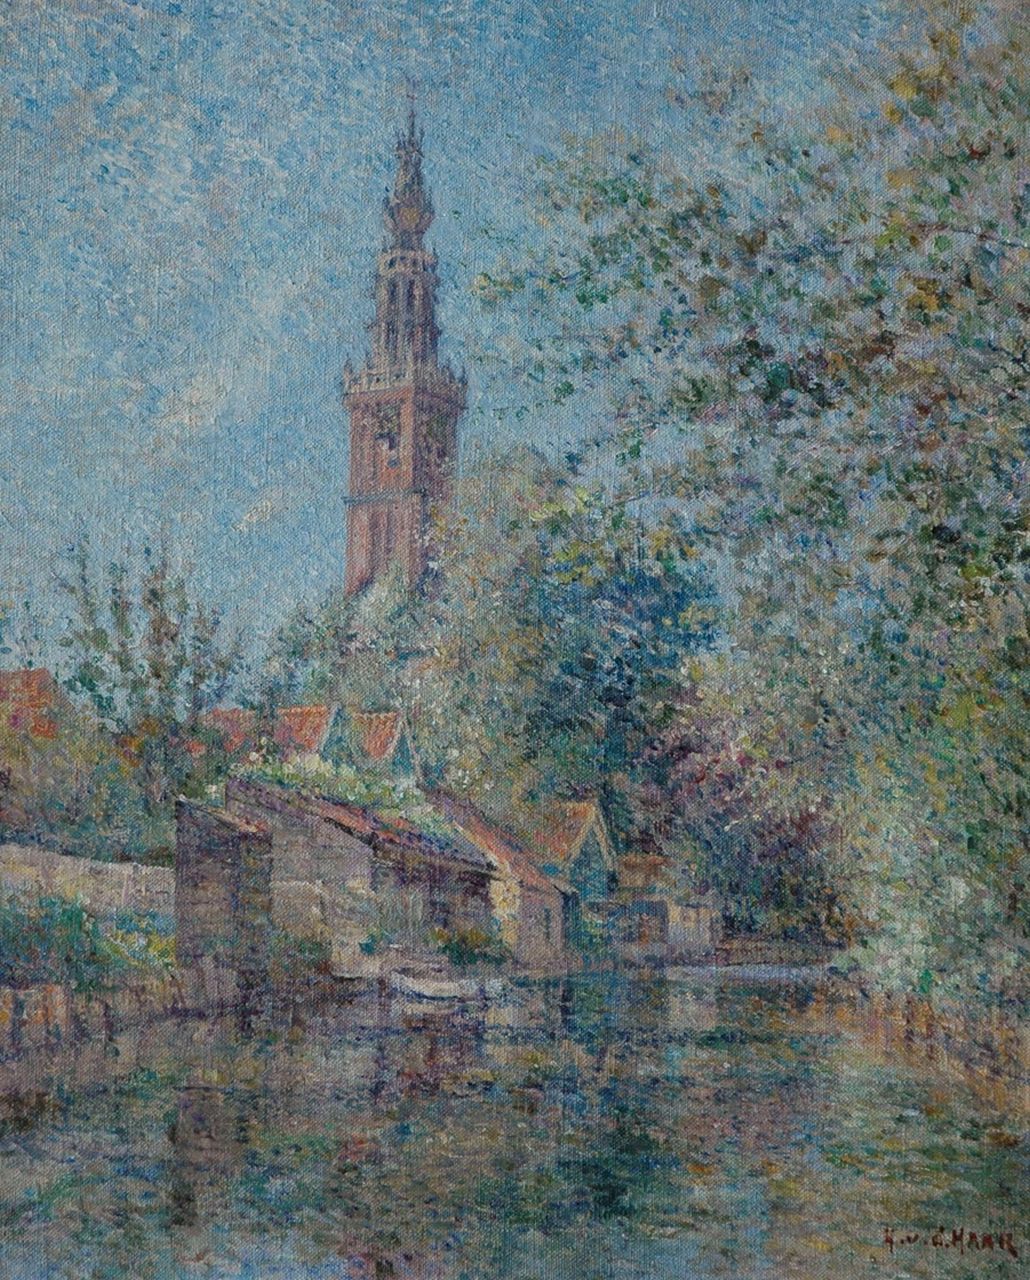 Herman ter Haar | A view in Edam with the Speeltoren, Öl auf Leinwand, 50,3 x 40,3 cm, signed l.r.